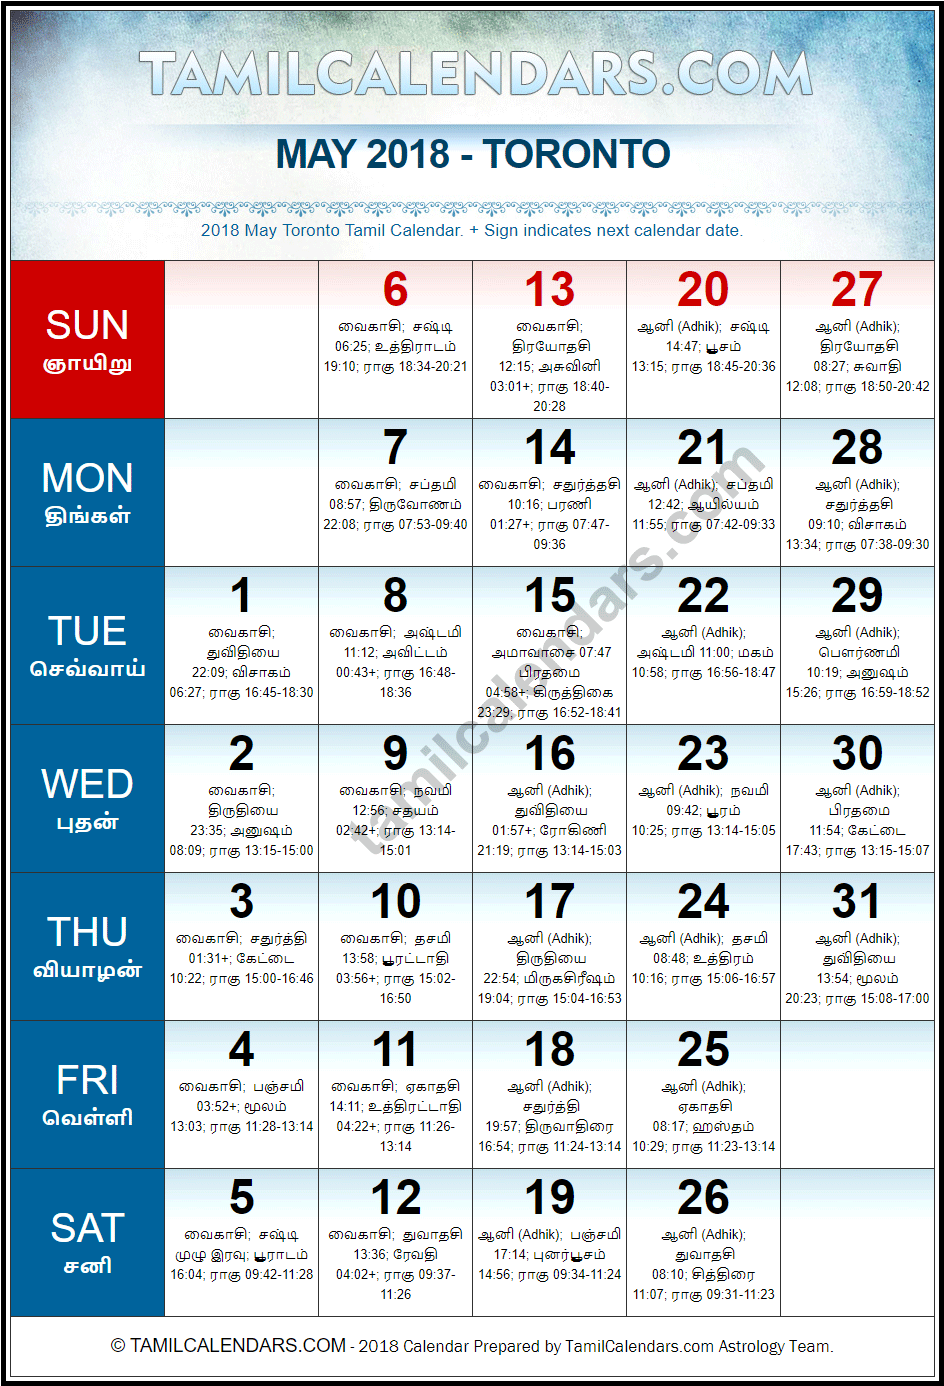 May 2018 Tamil Calendar for Toronto, Canada